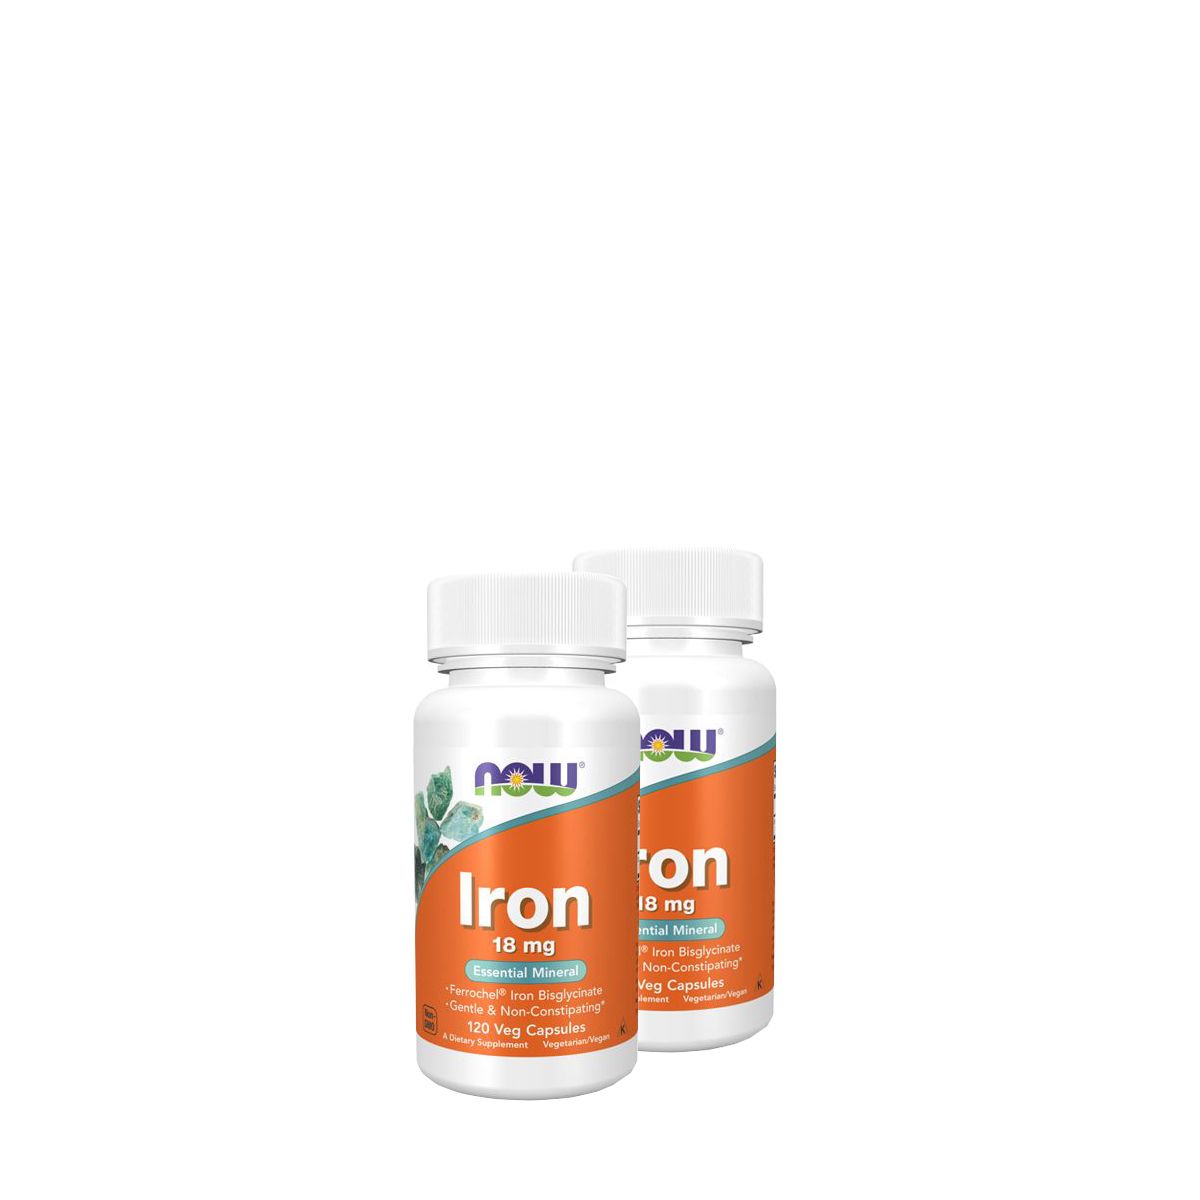 Vas-biszglicinát 18 mg, Now Iron from Ferrochel Iron Bisglycinate, 2x120 kapszula